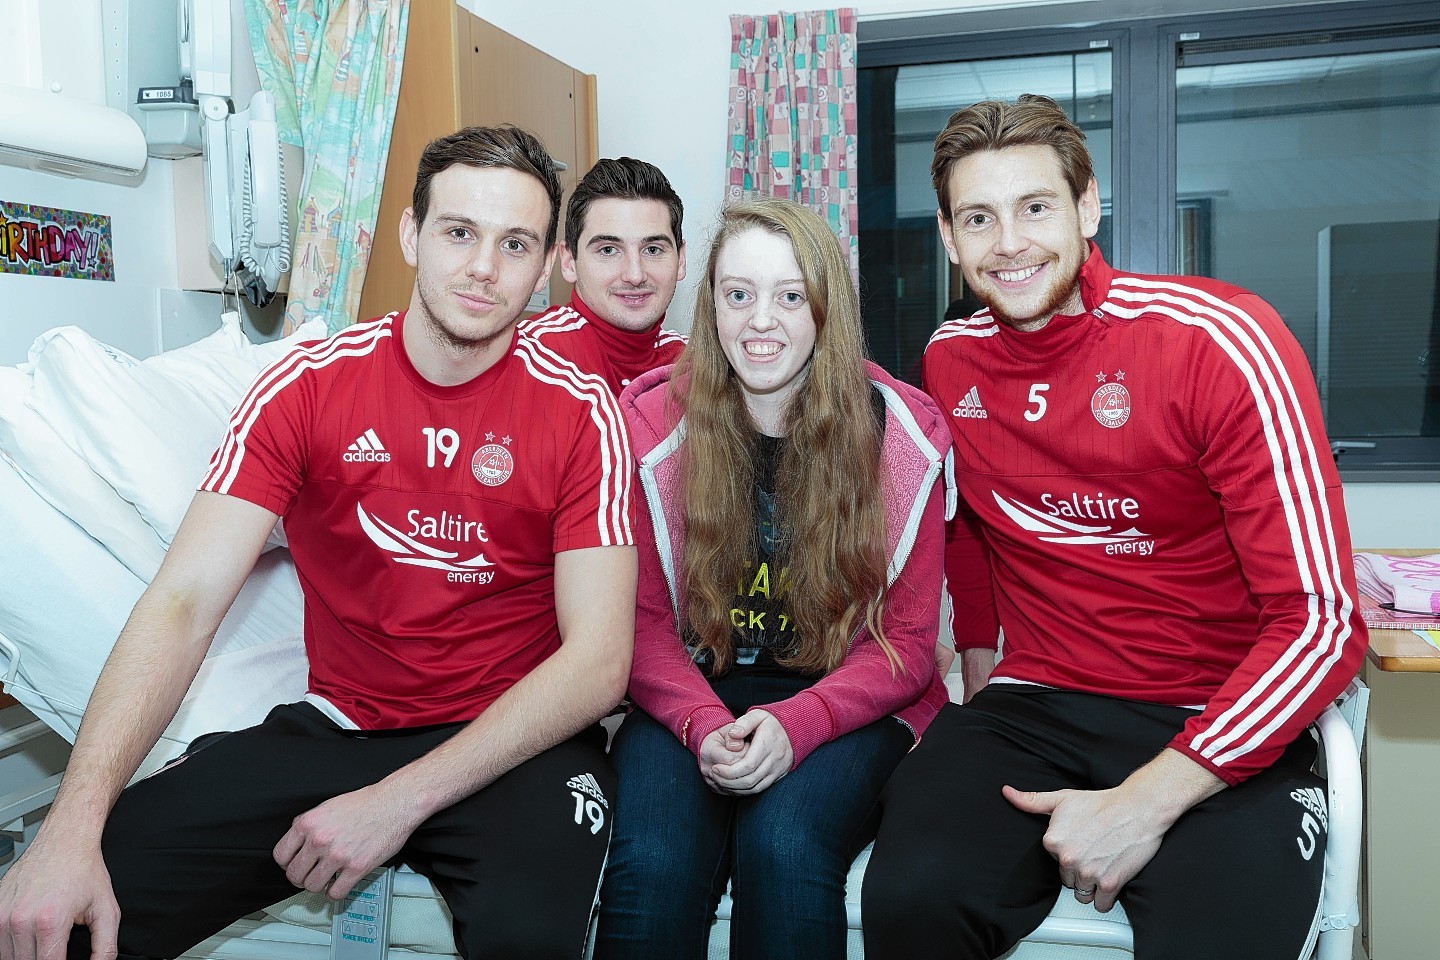 Dons players visit children at Aberdeen hospital